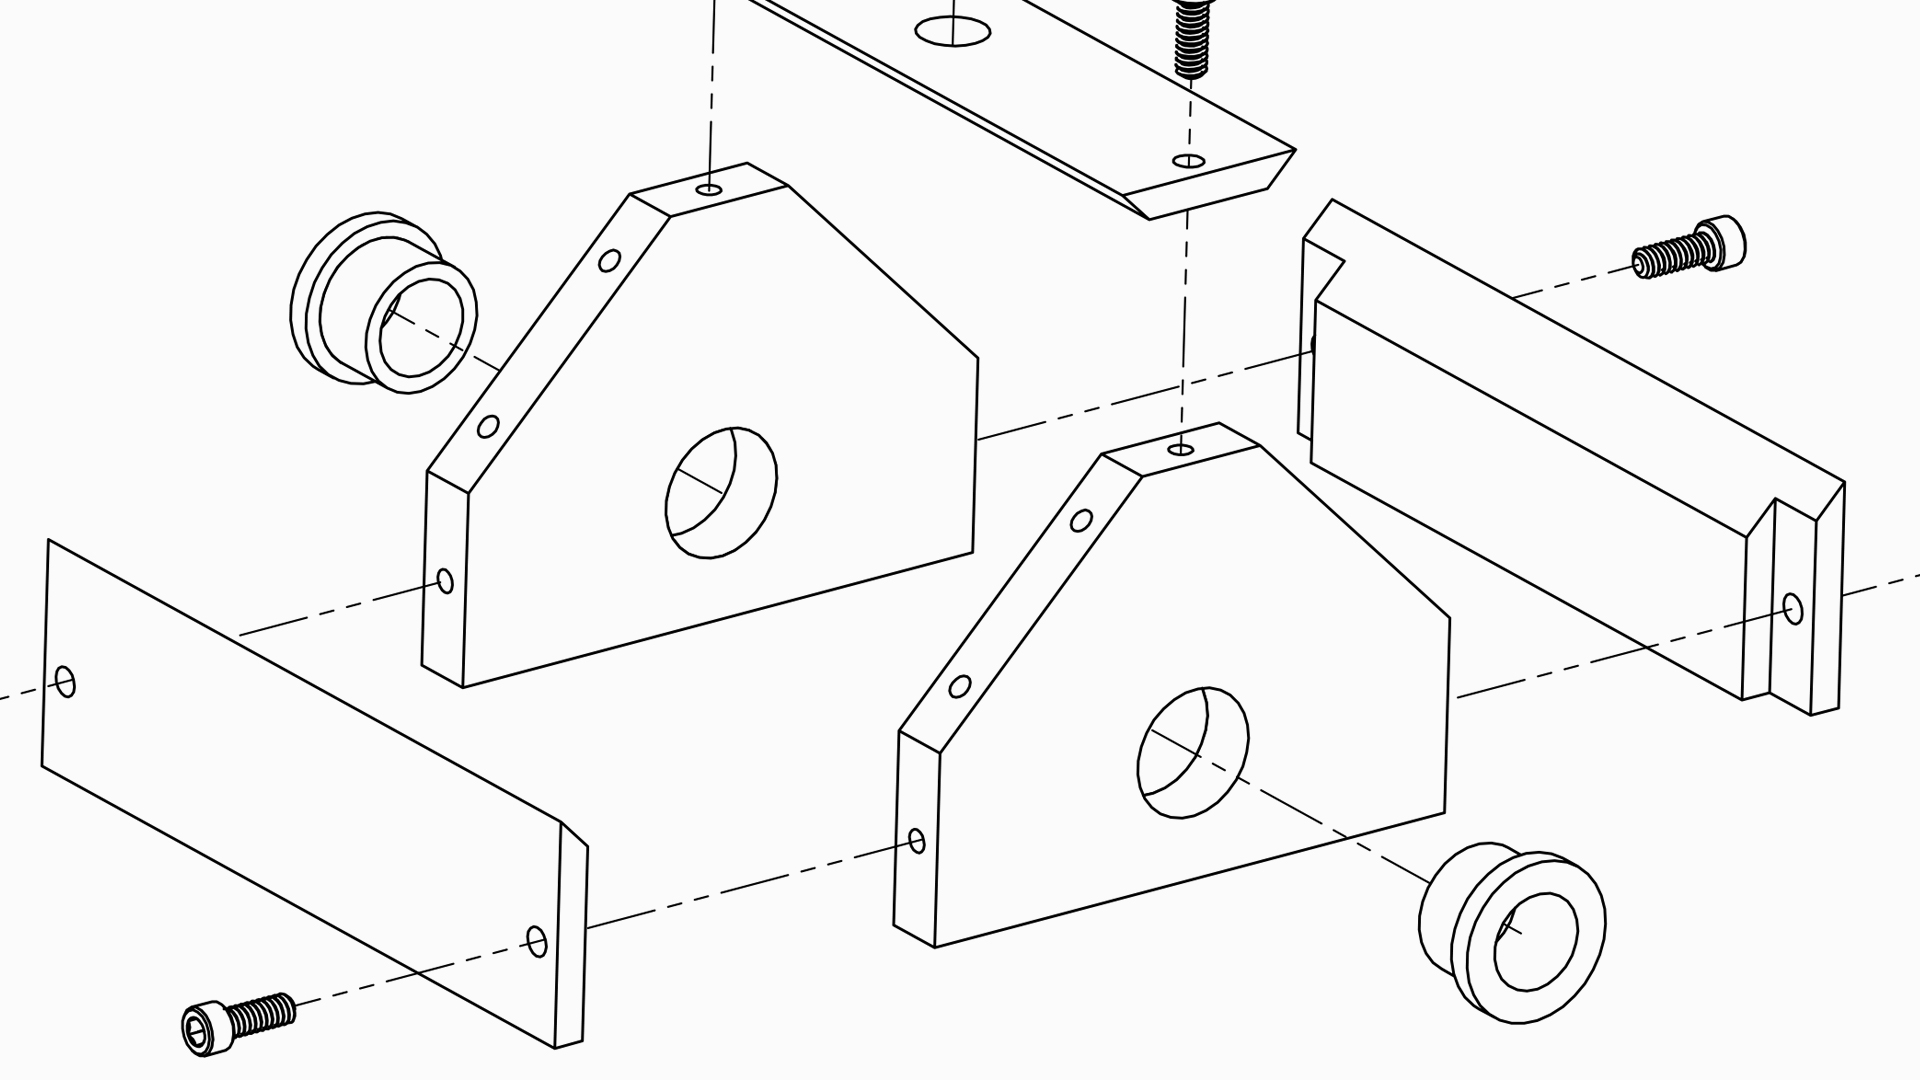 Engineering Tools Drawing at GetDrawings | Free download